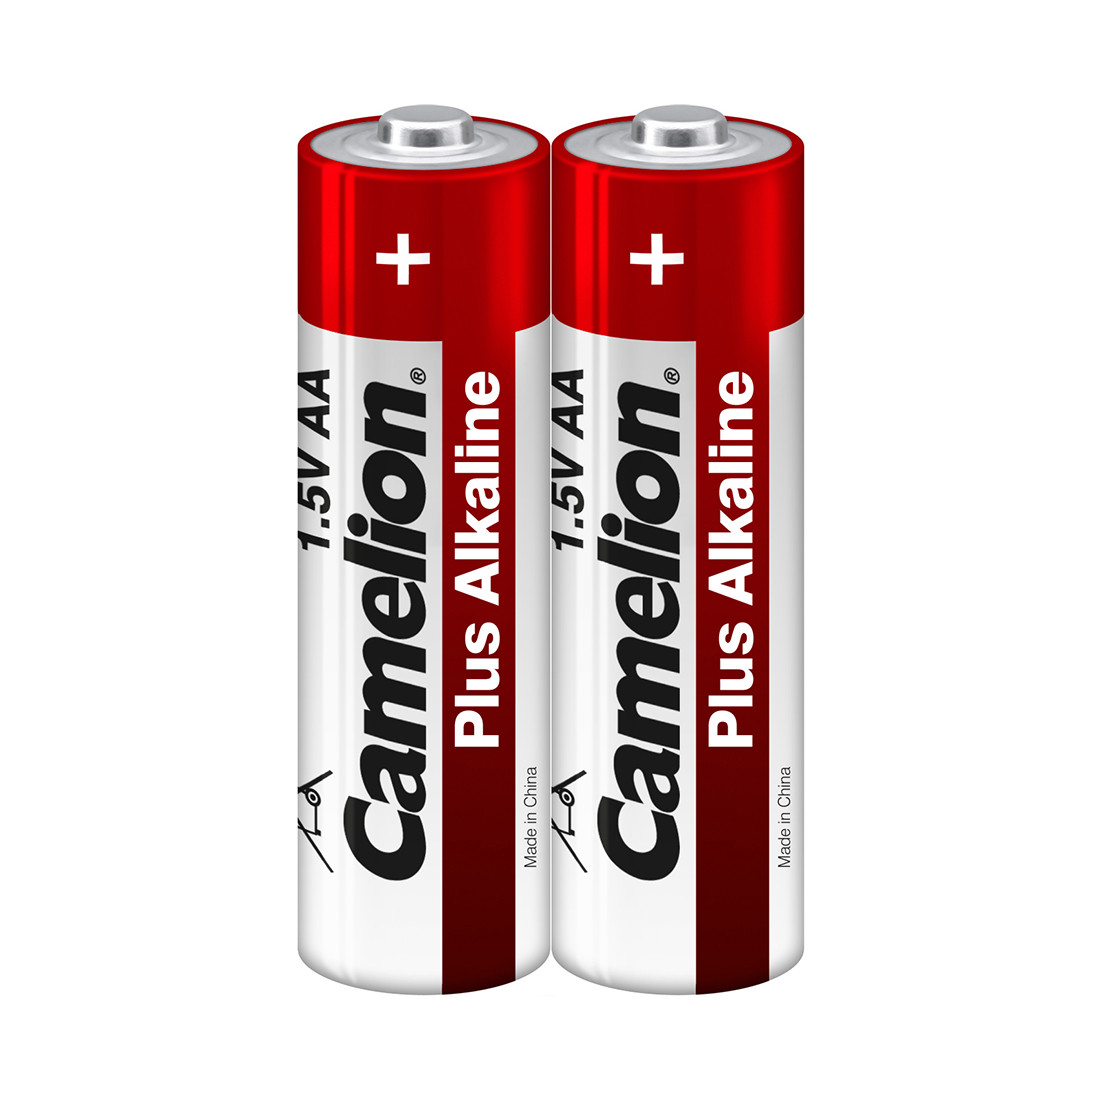 Батарейка  CAMELION  LR6-SP2  Plus Alkaline  AA  1.5V  2700 mAh  2 шт. в плёнке